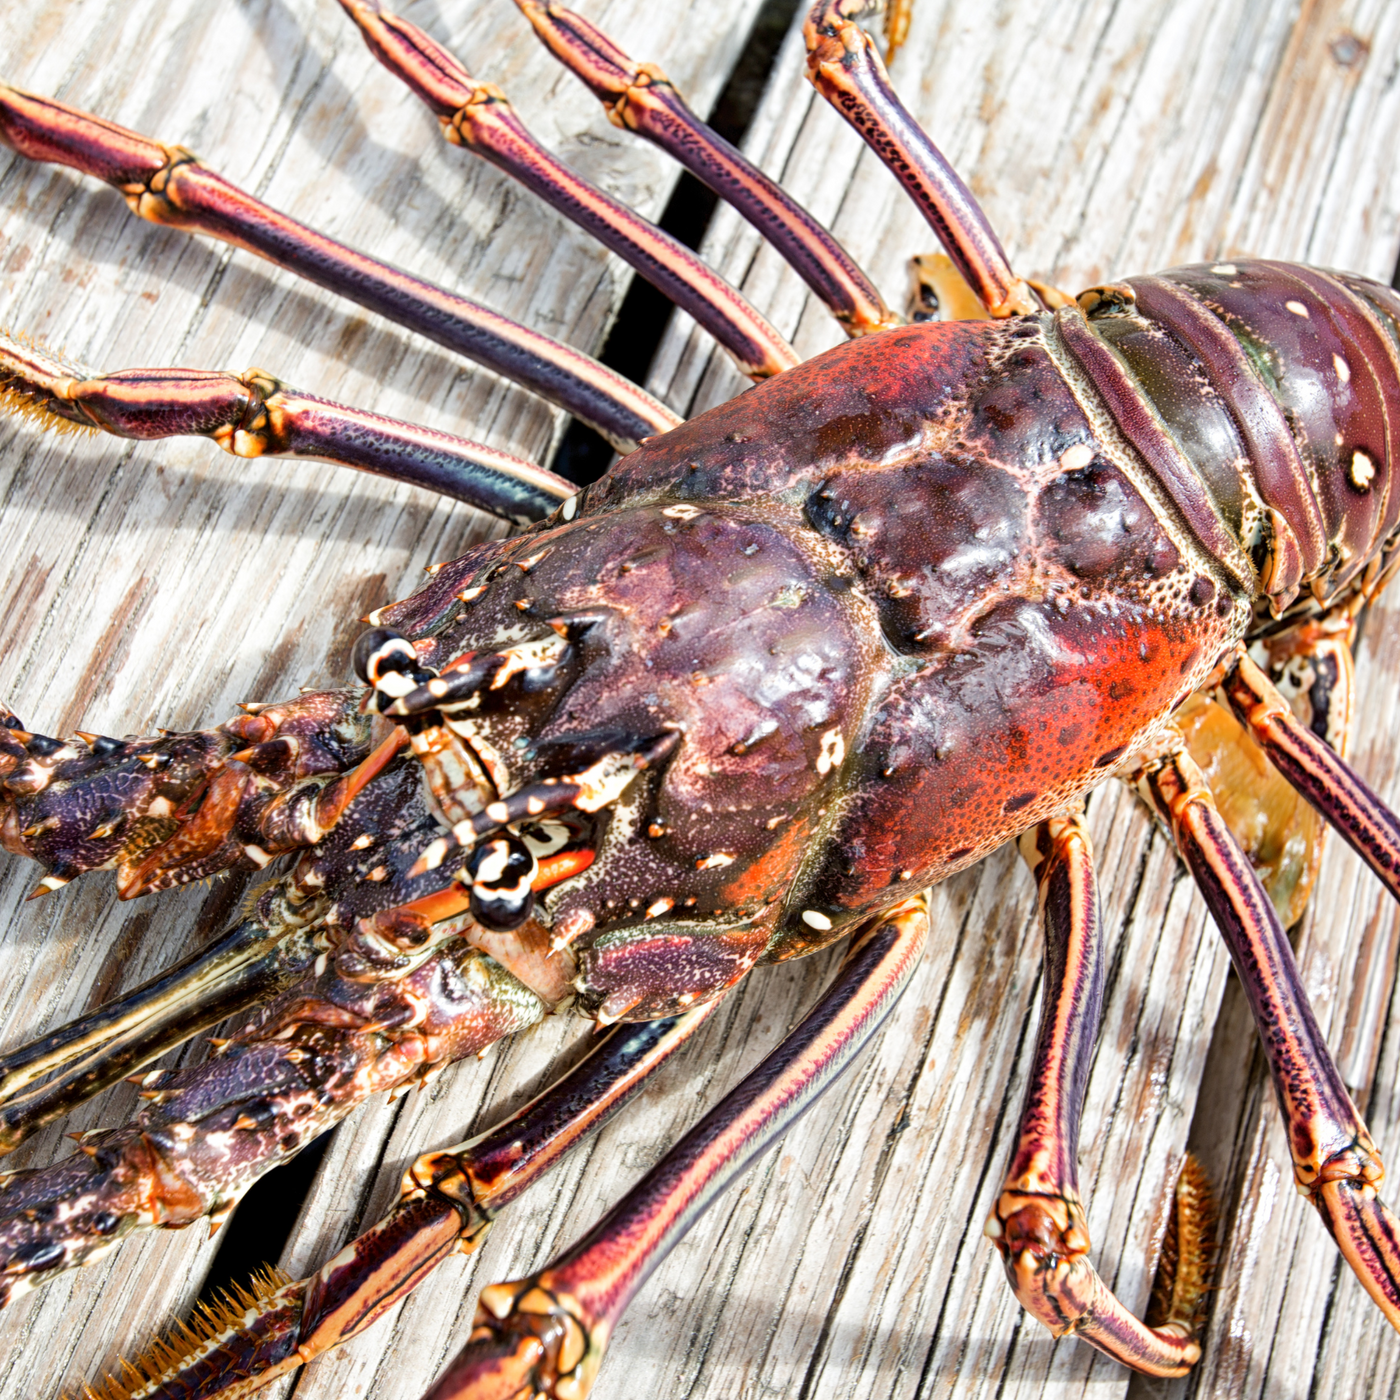 Australian Live Lobster 1kg.